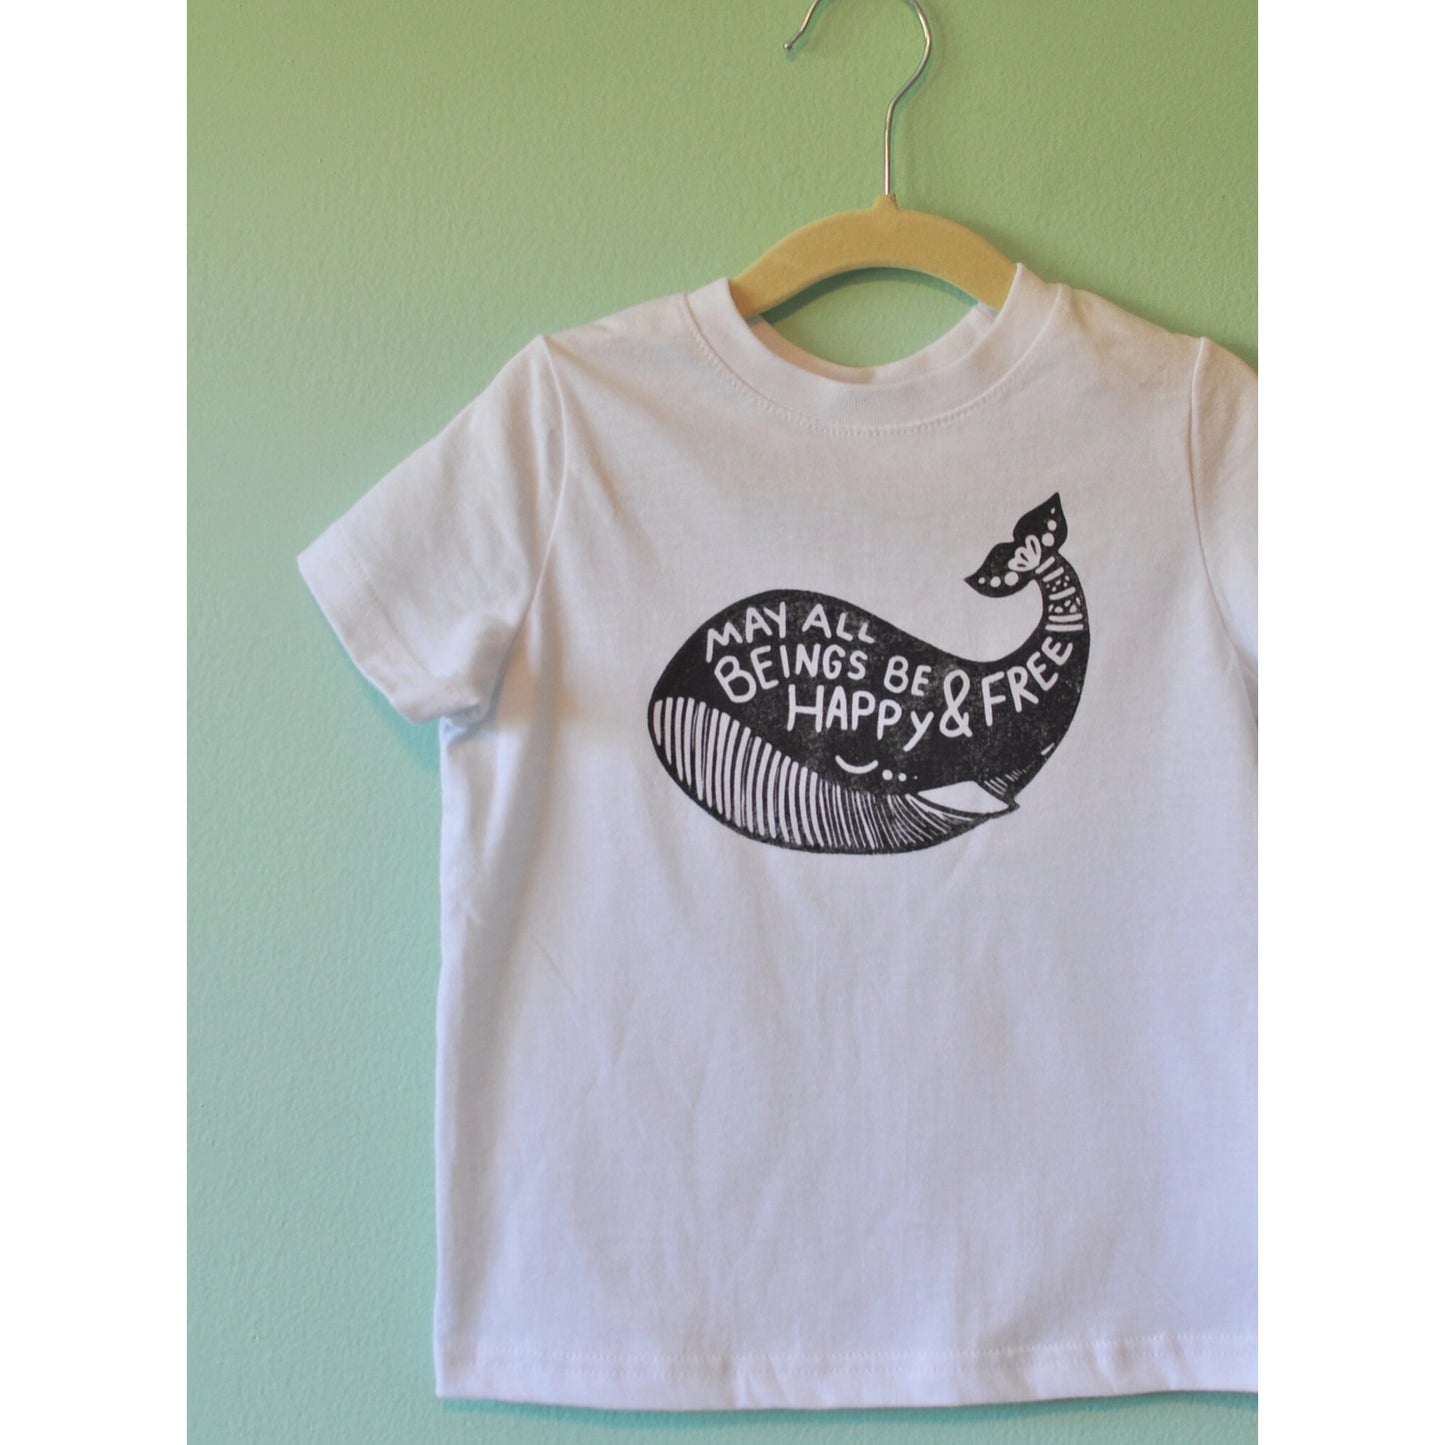 Mantra Whale Kids Tee Shirt